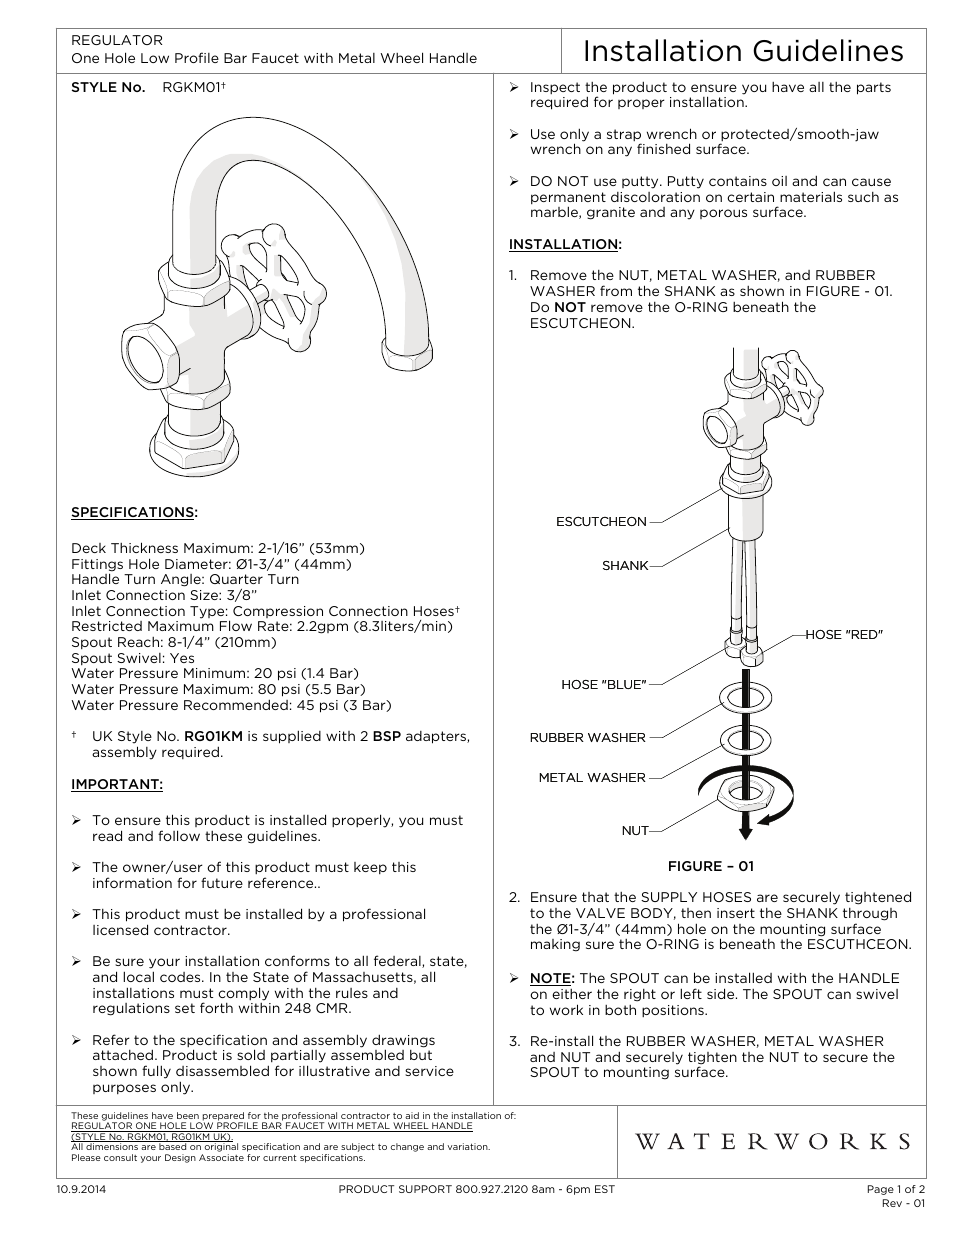 Regulator One Hole Low Profile Bar Faucet, Metal Wheel Handle